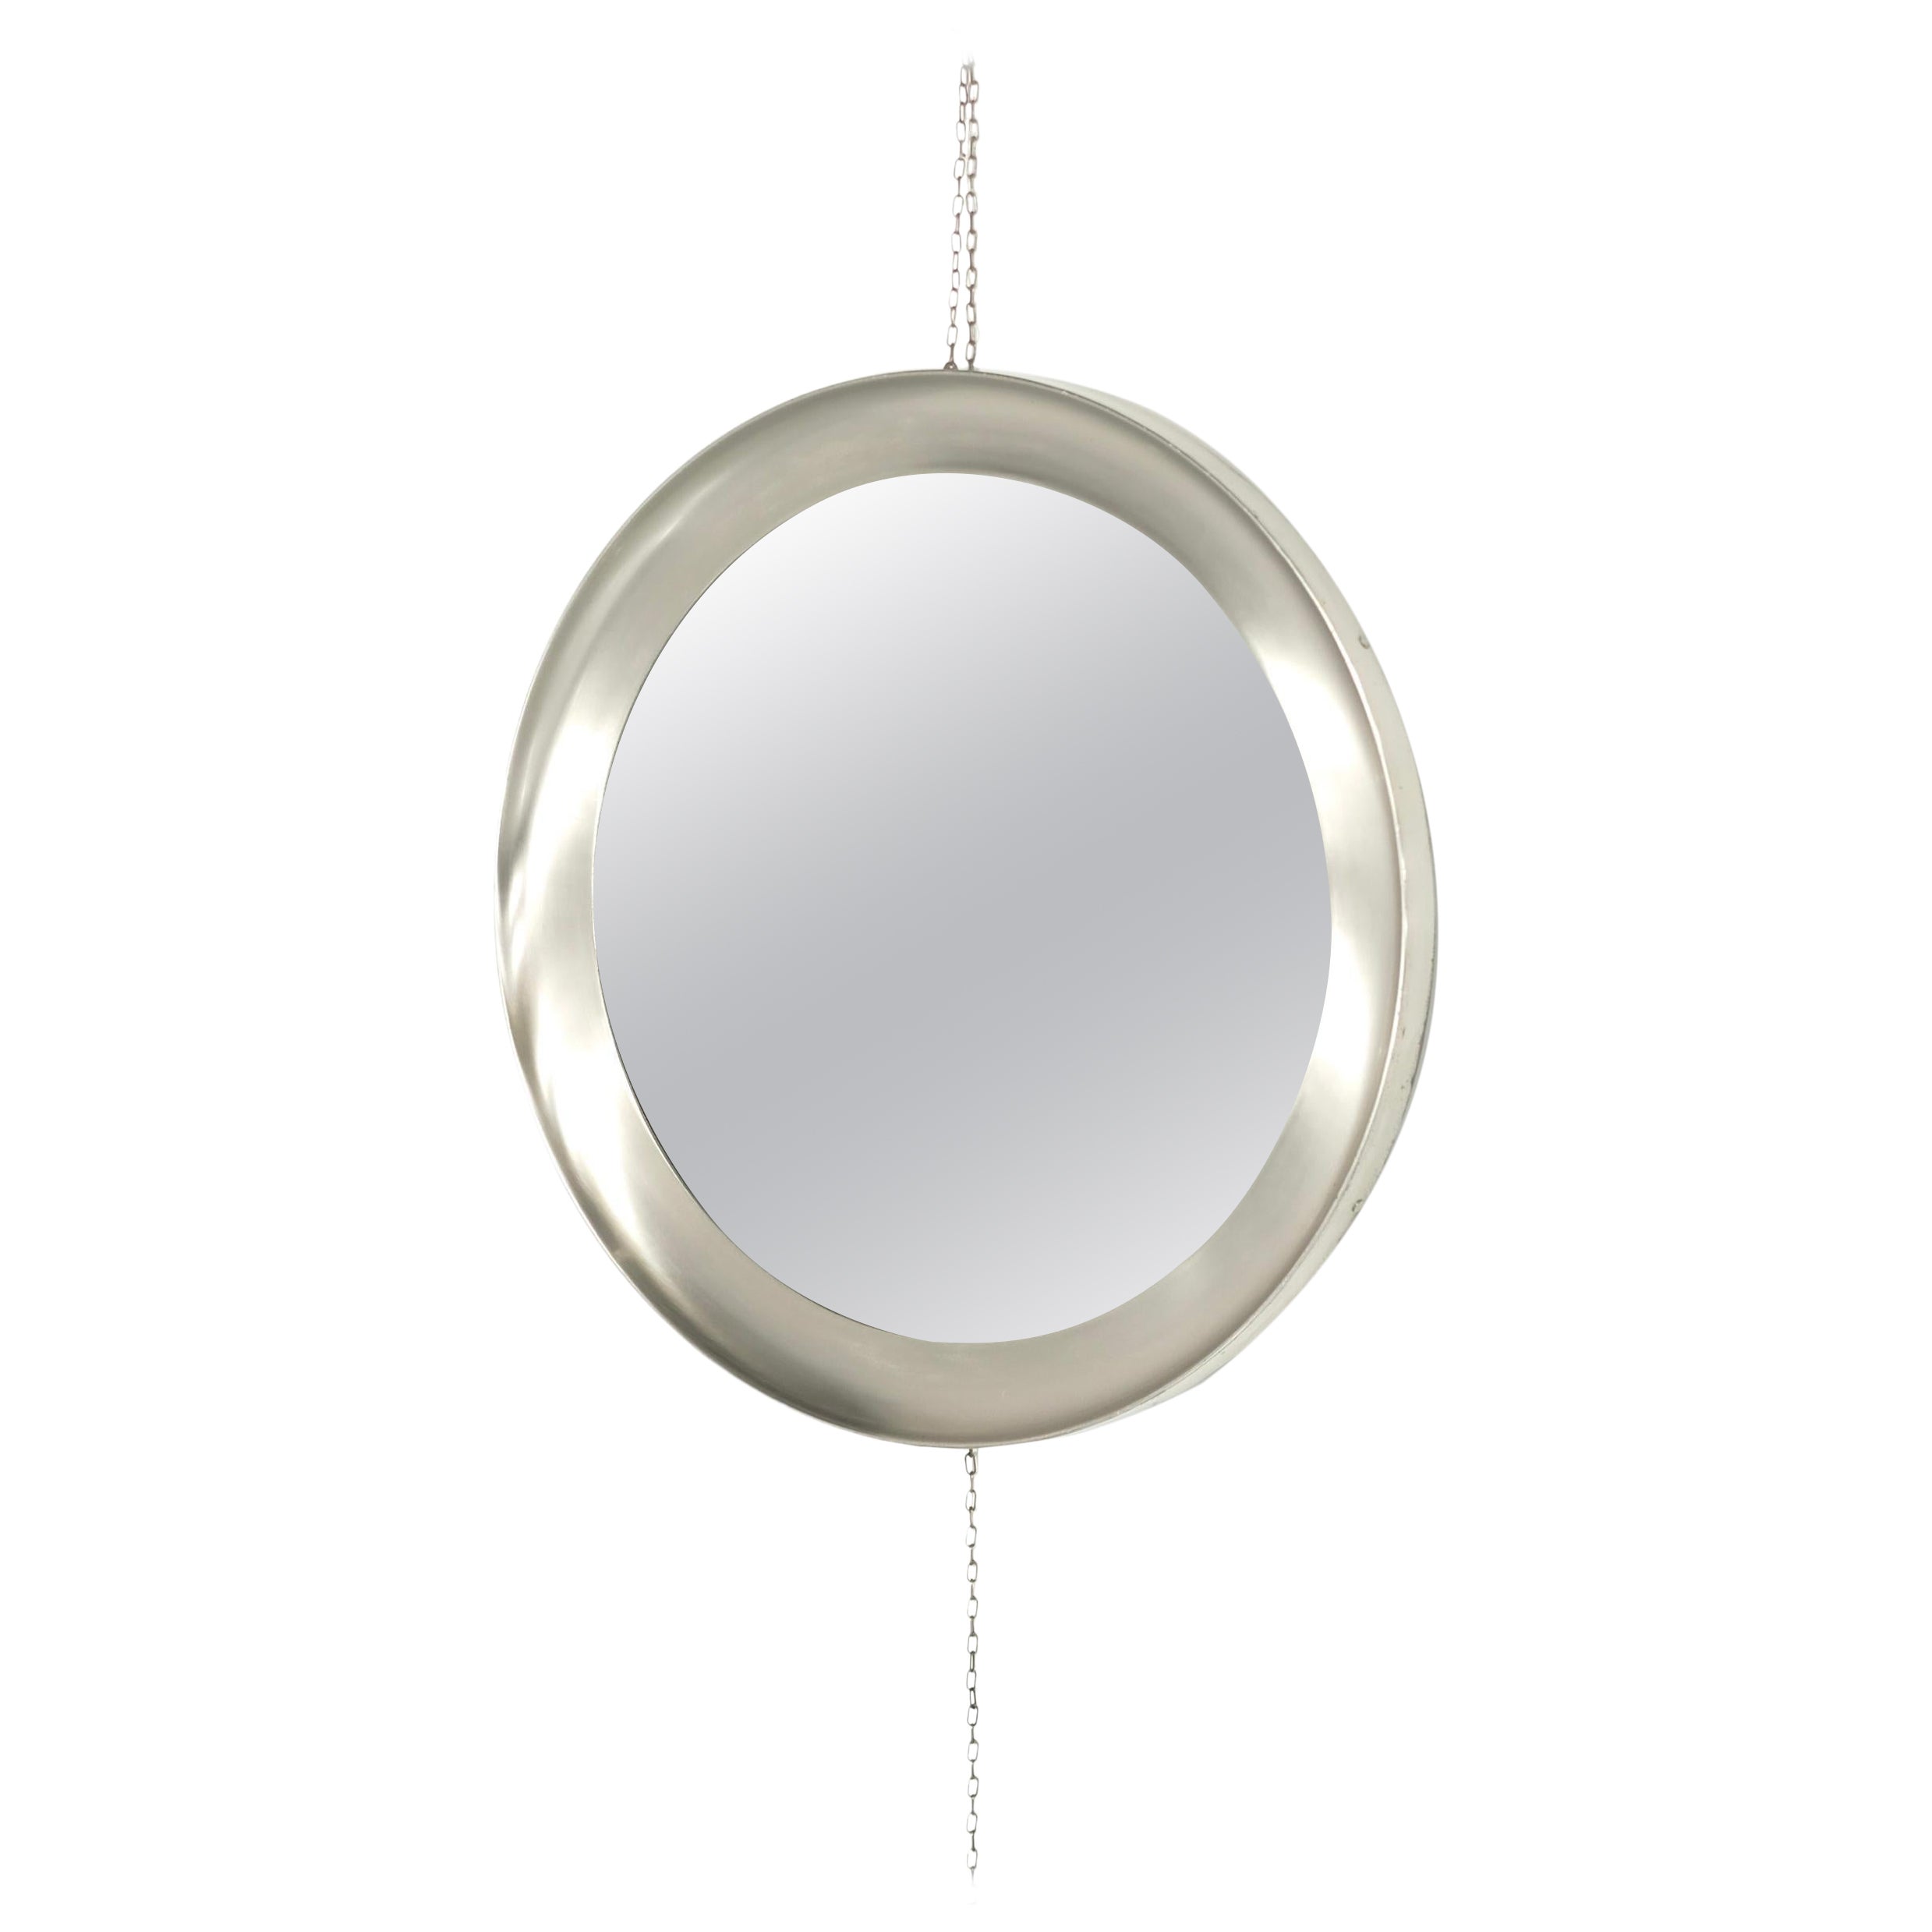 Mirror "Narciso" designed by Sergio Mazza for Artemide, Italy 1960's.